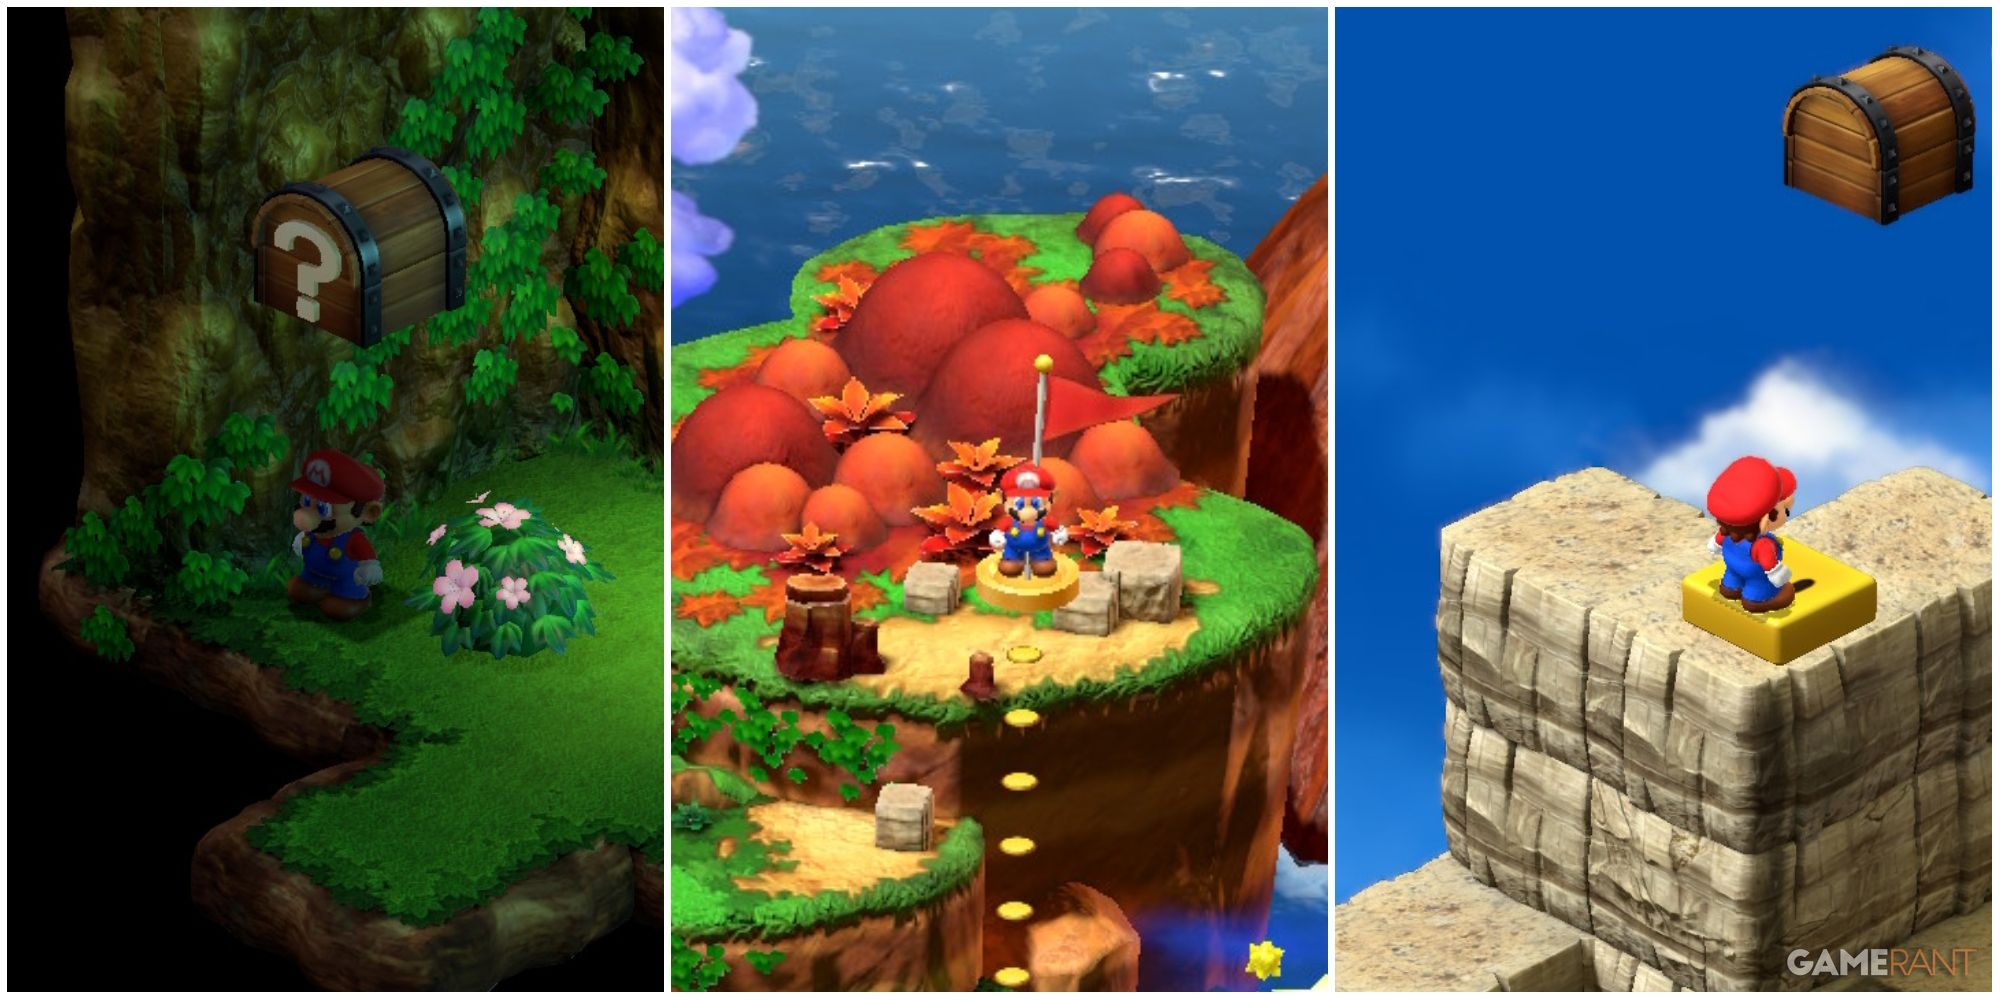 Super Mario RPG - All Hidden Treasure Locations Guide - GameSpot